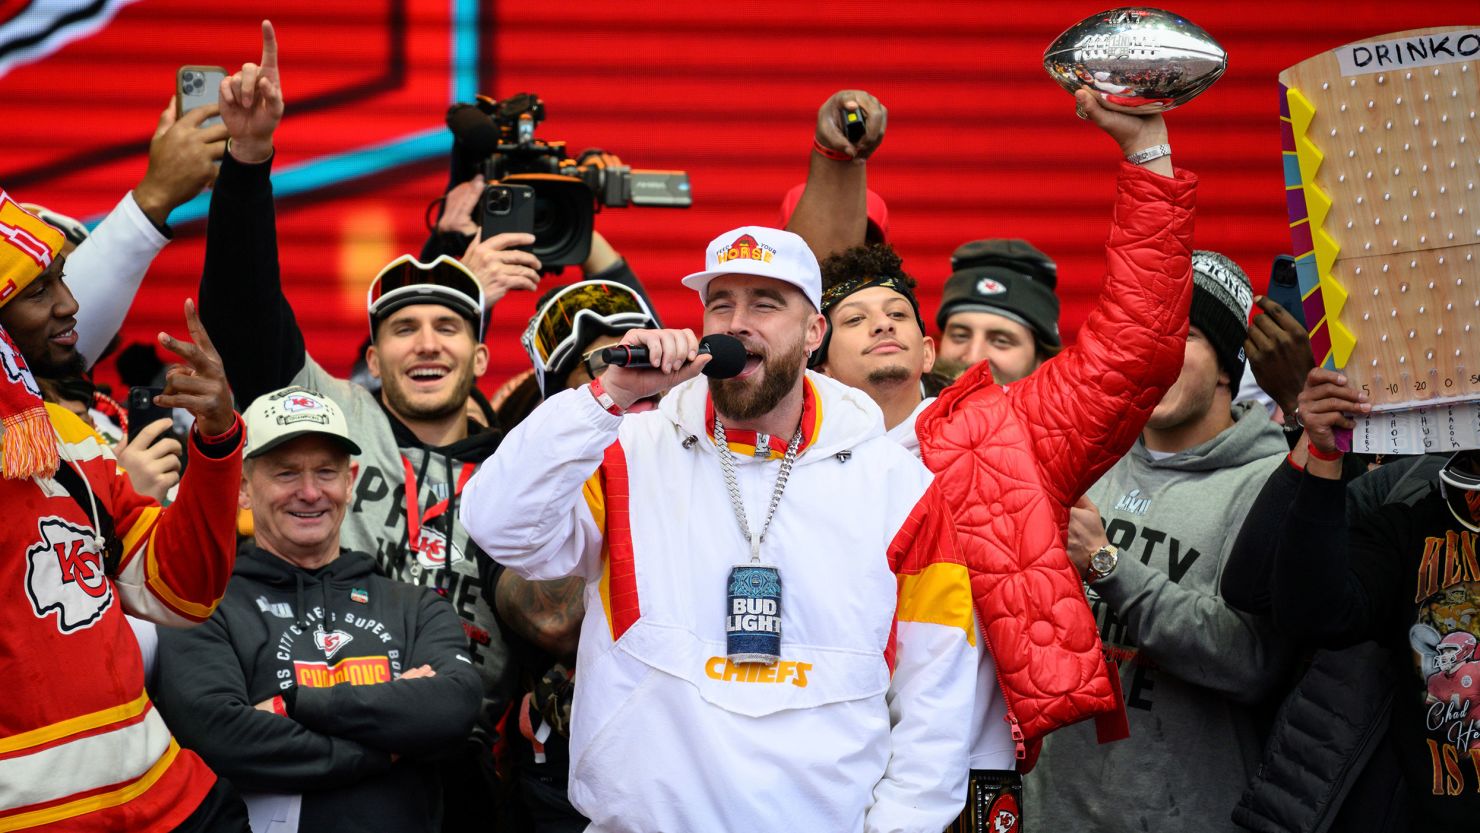 Kansas City Chiefs parade and rally Super Bowl champions continue